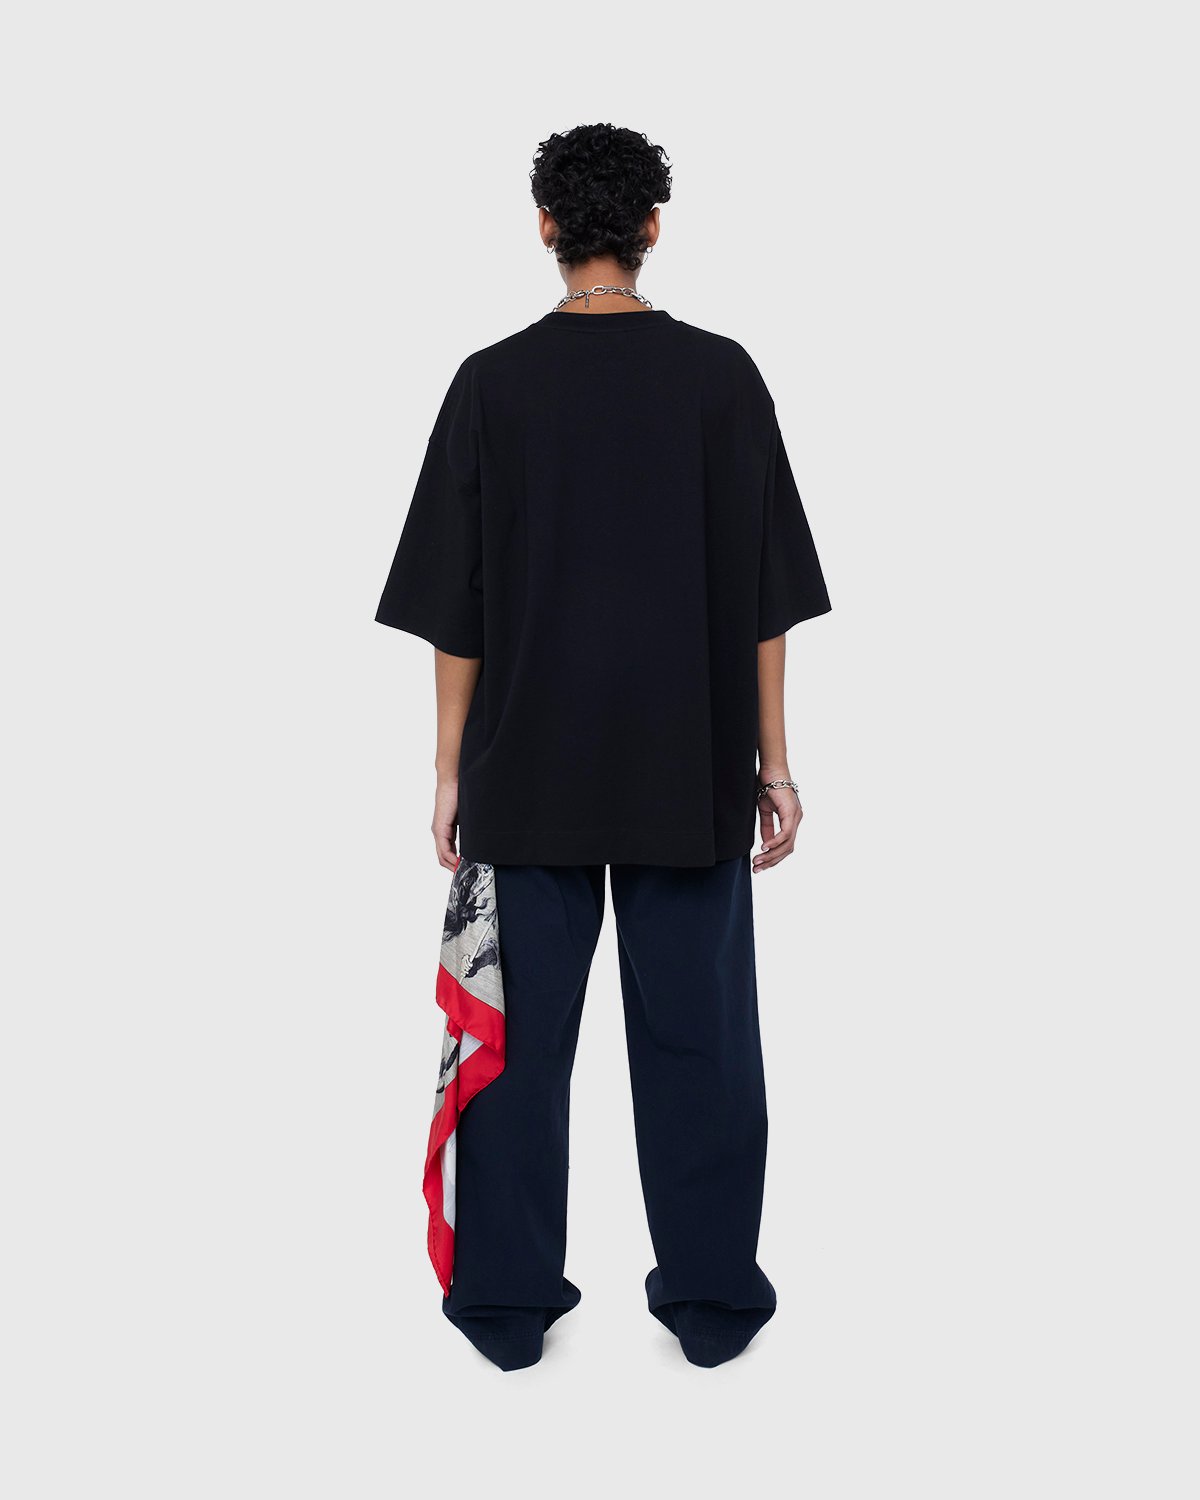 Dries van Noten - Hen Oversized T-Shirt Black - Clothing - Black - Image 5